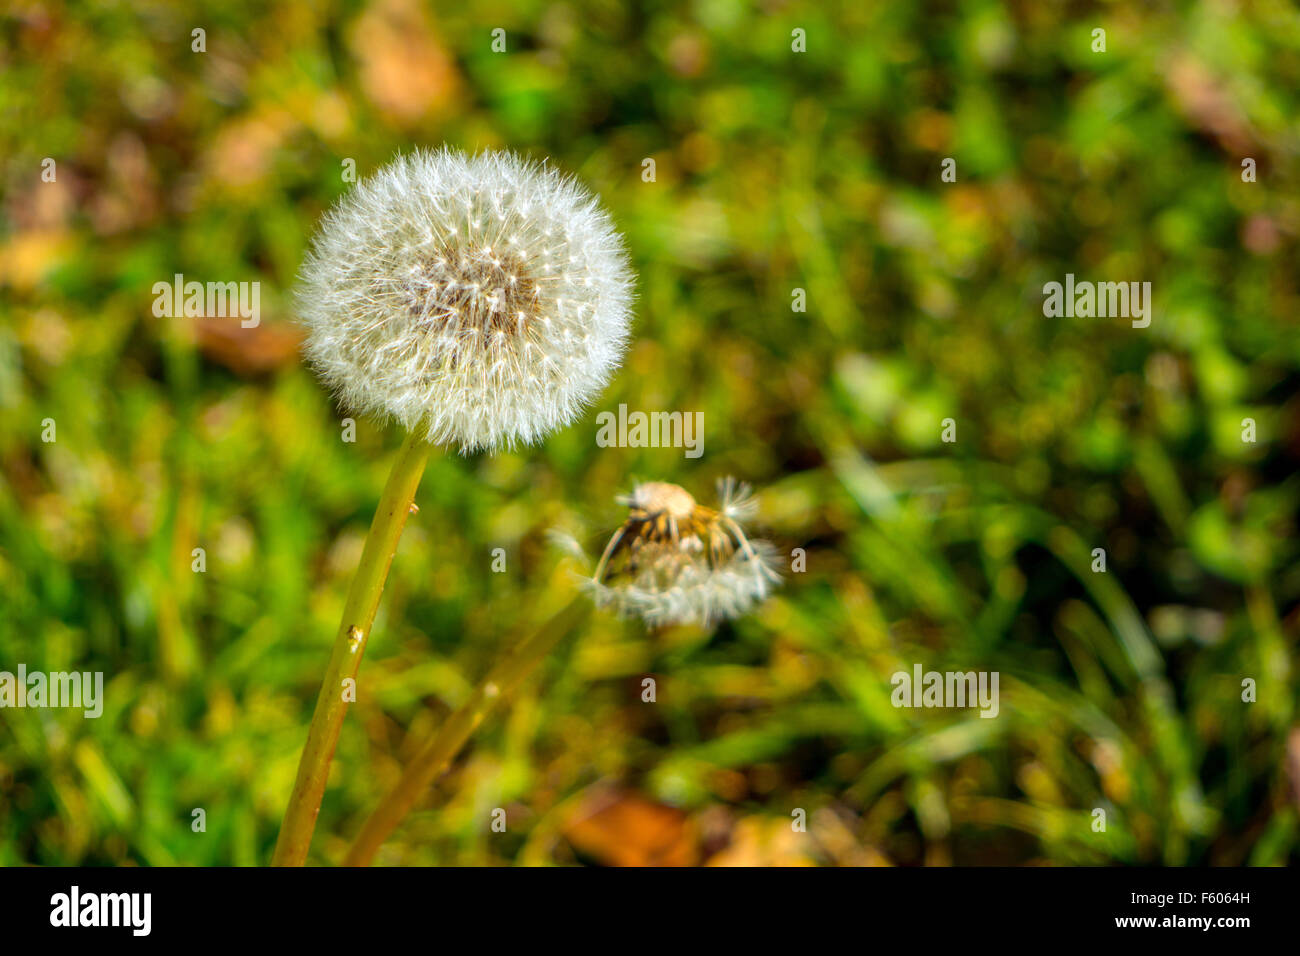 Dandelion seed clock, Taraxacum, telling the time Stock Photo